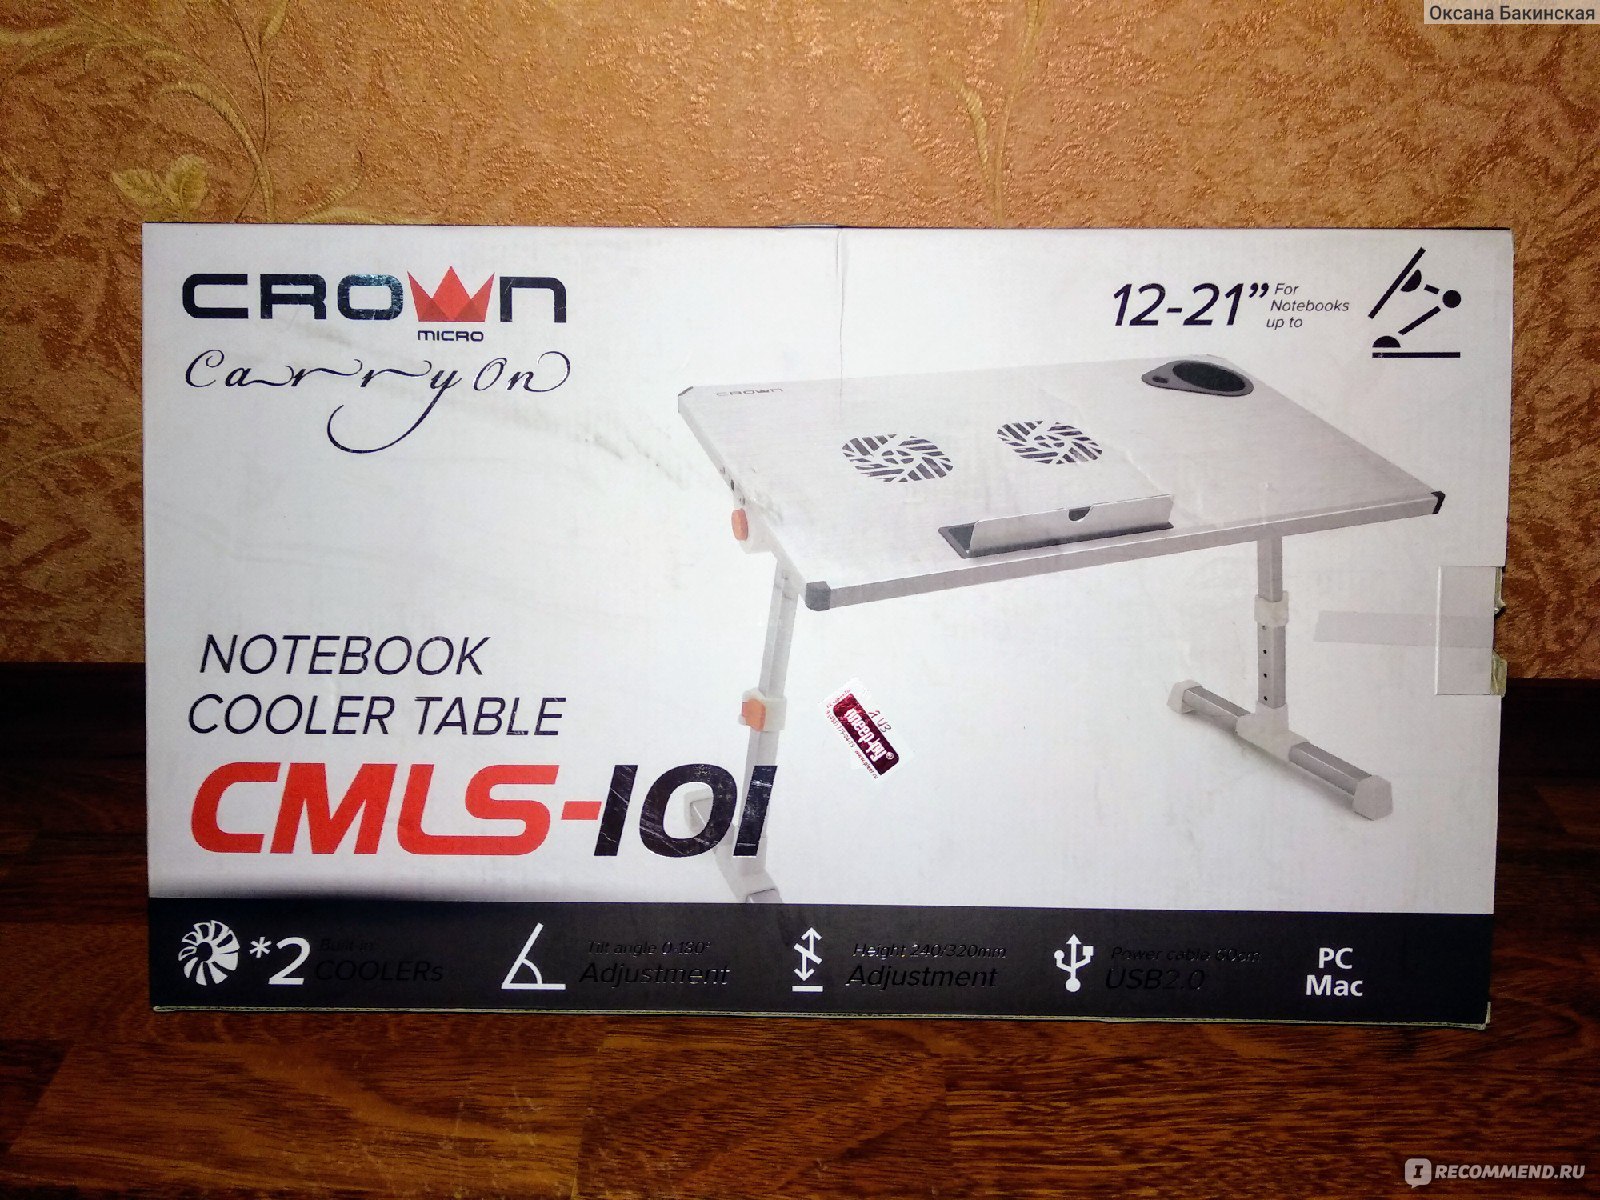 Crown CMLS-101